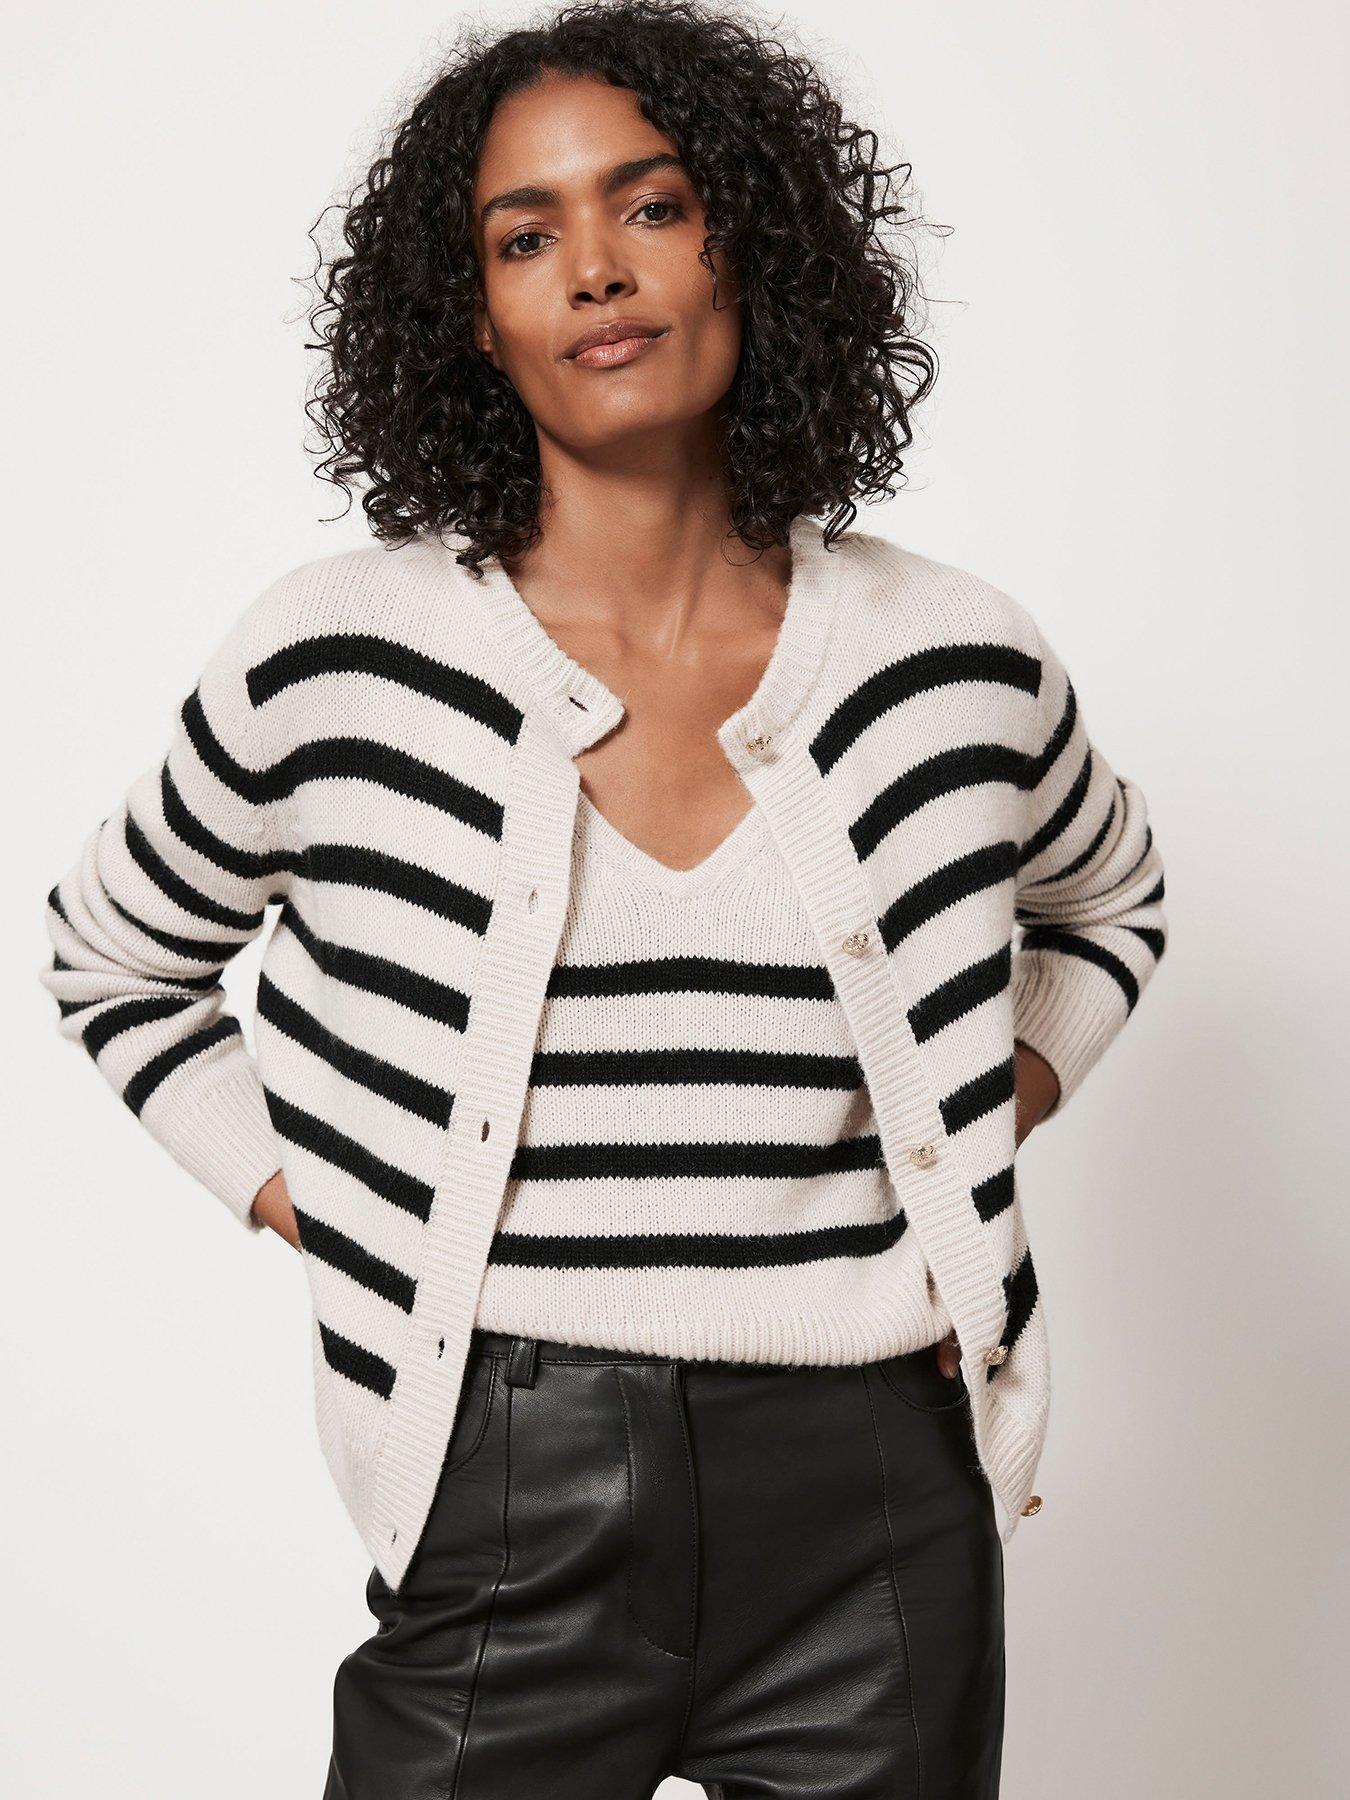 Sweater Vest - Black/striped - Ladies